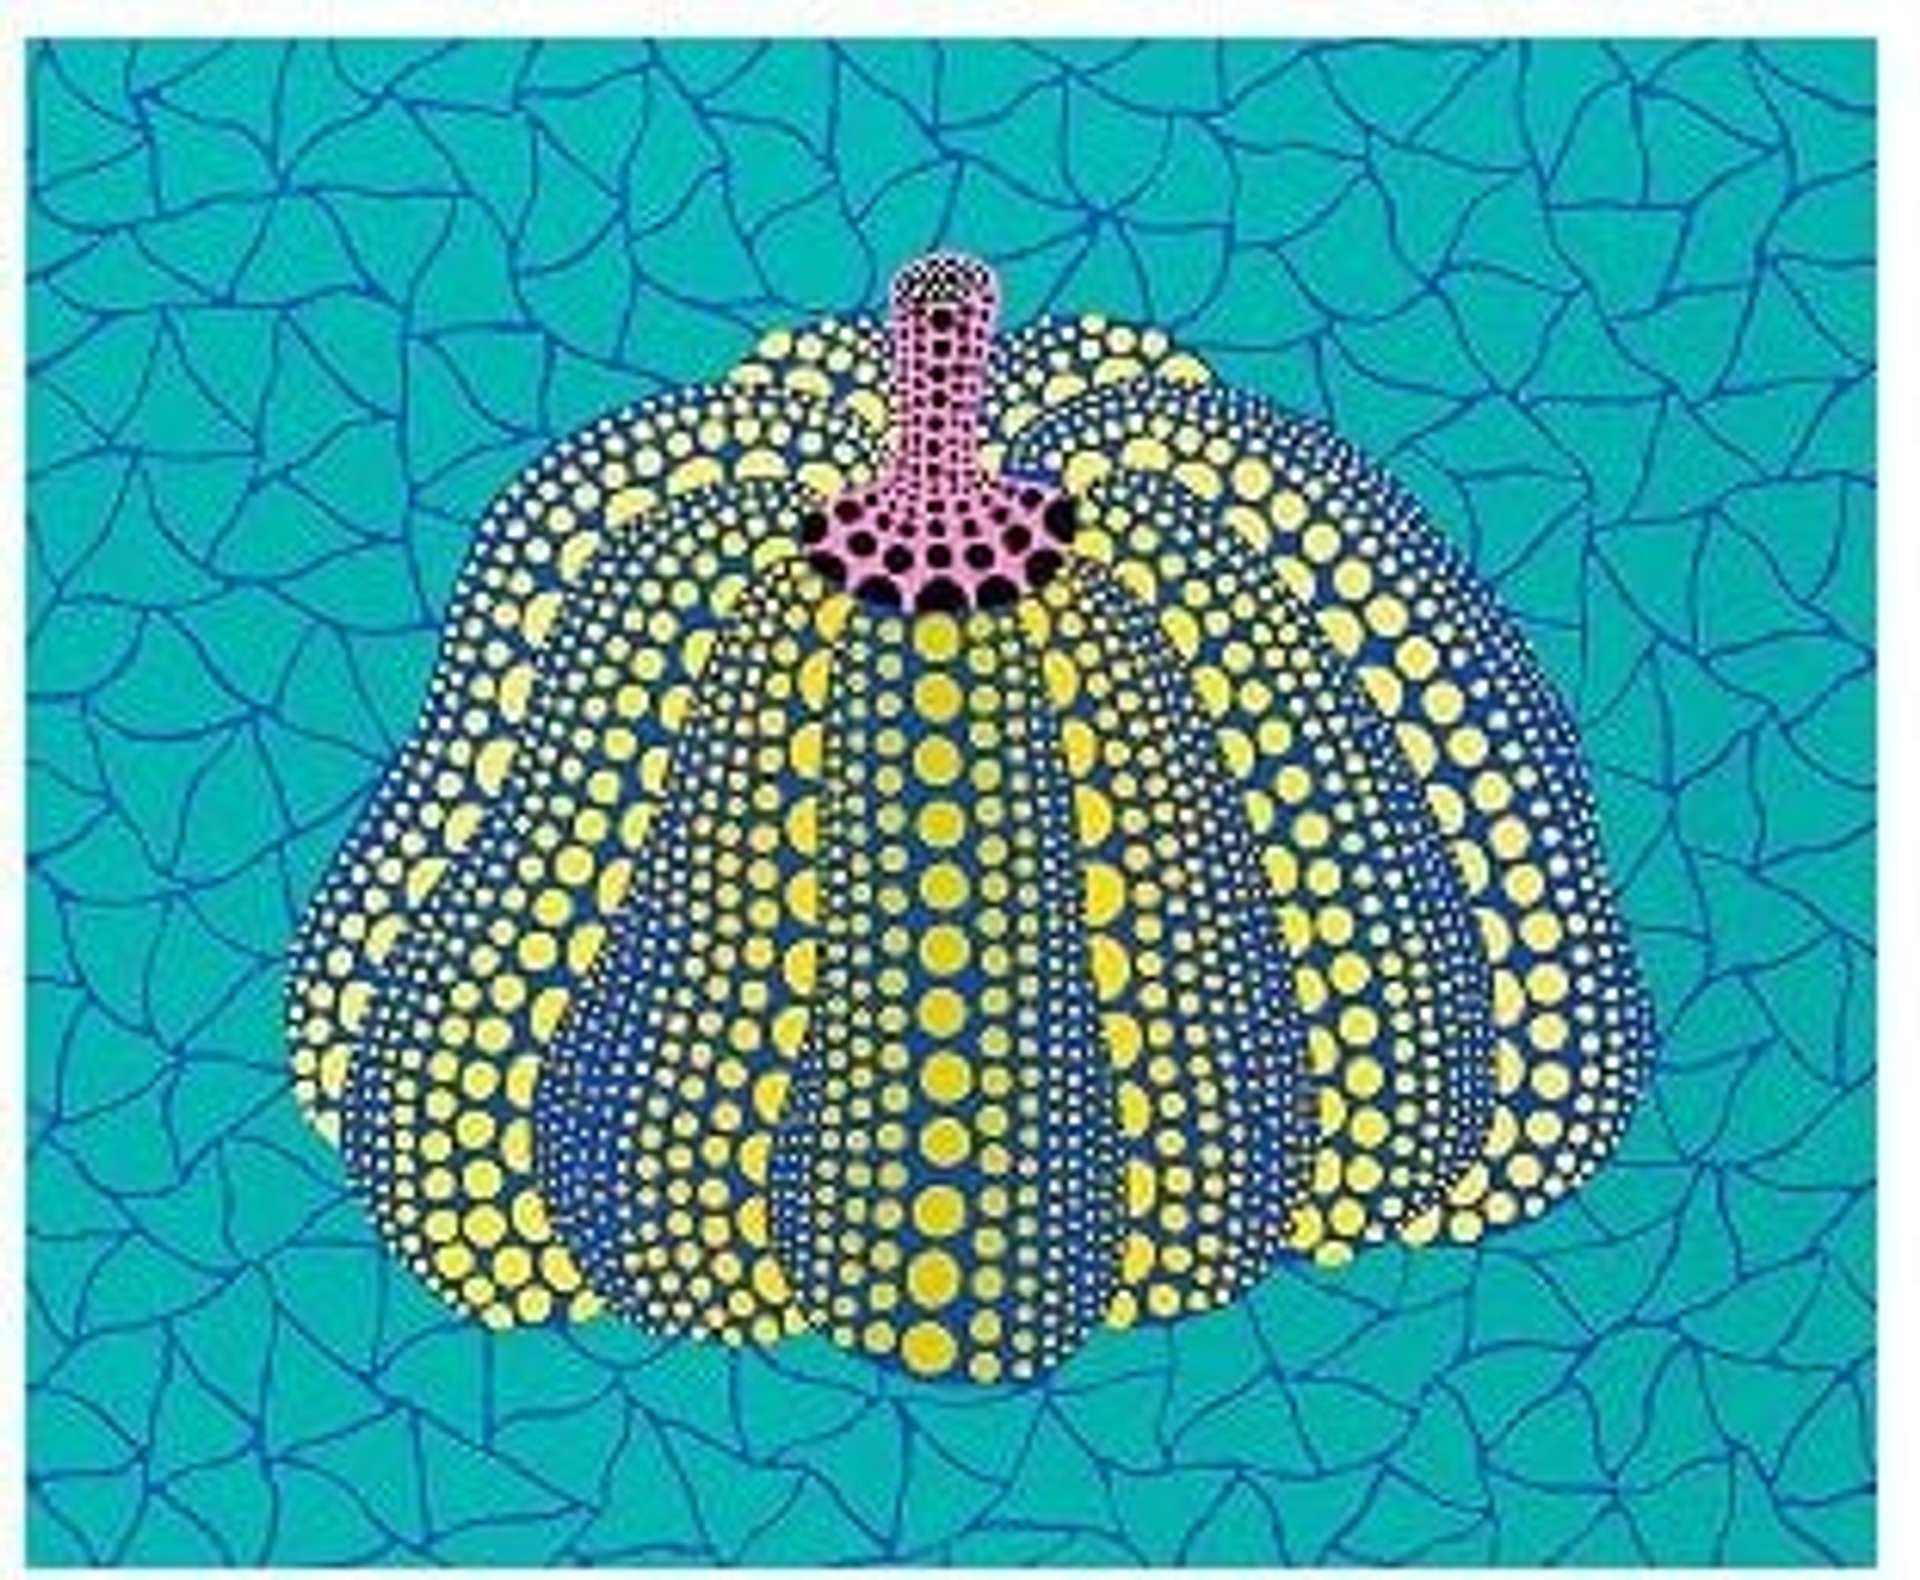 Yayoi Kusama's Pumpkin (OG) , Kusama 156. A screenprint of a pumpkin created out of a pattern of yellow, blue, and pink polka dots against a geometric patterned blue background